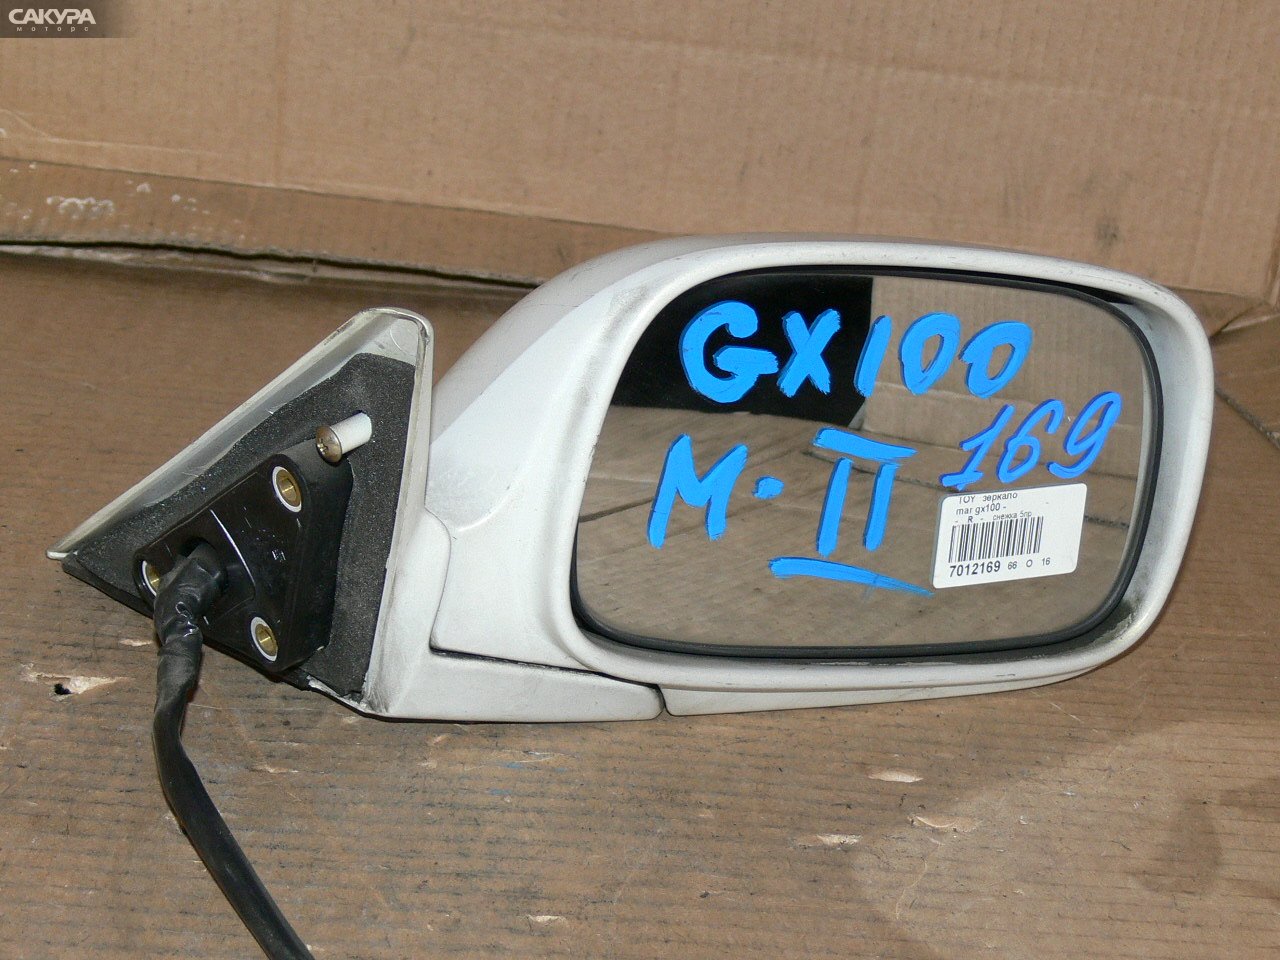 Зеркало боковое правое Toyota Mark II GX100: купить в Сакура Иркутск.